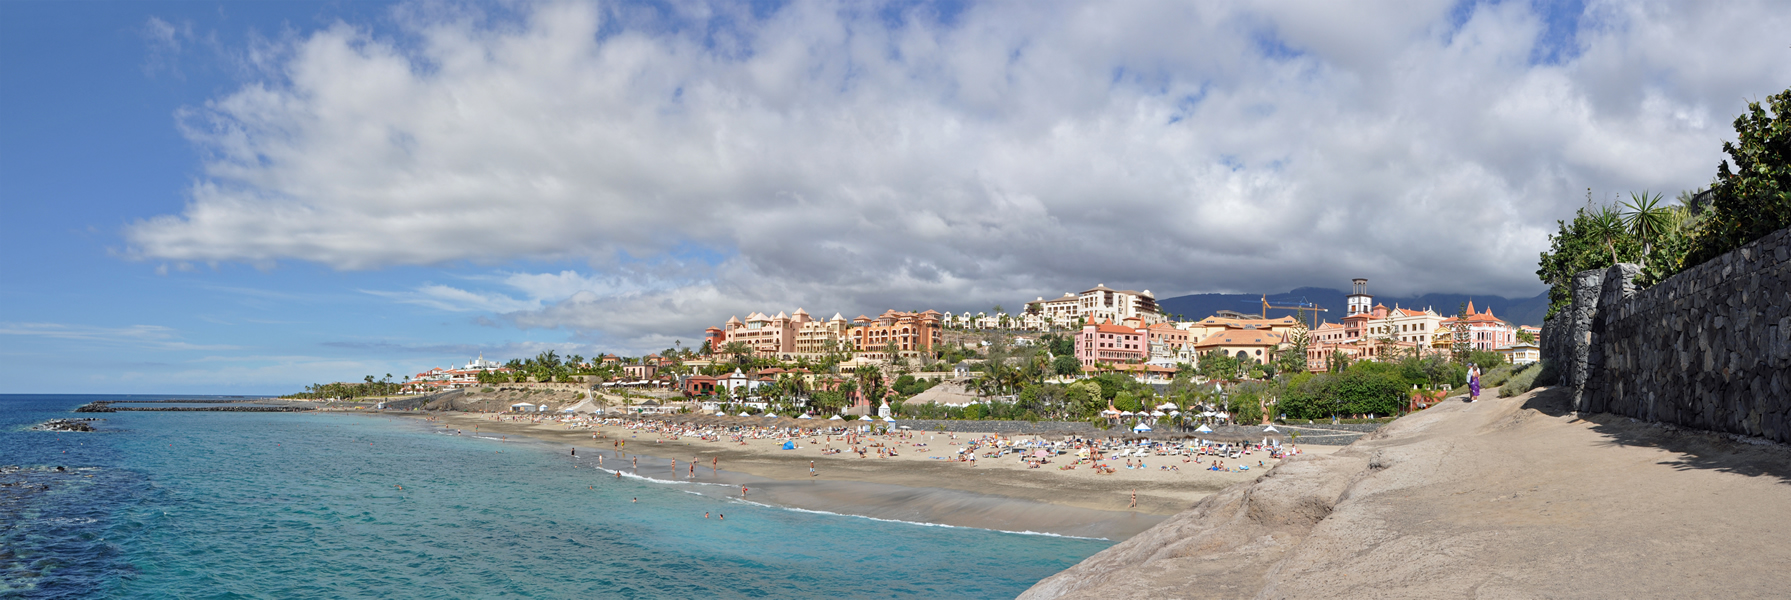 Playa del Duque, Tenerife, Canary Islands